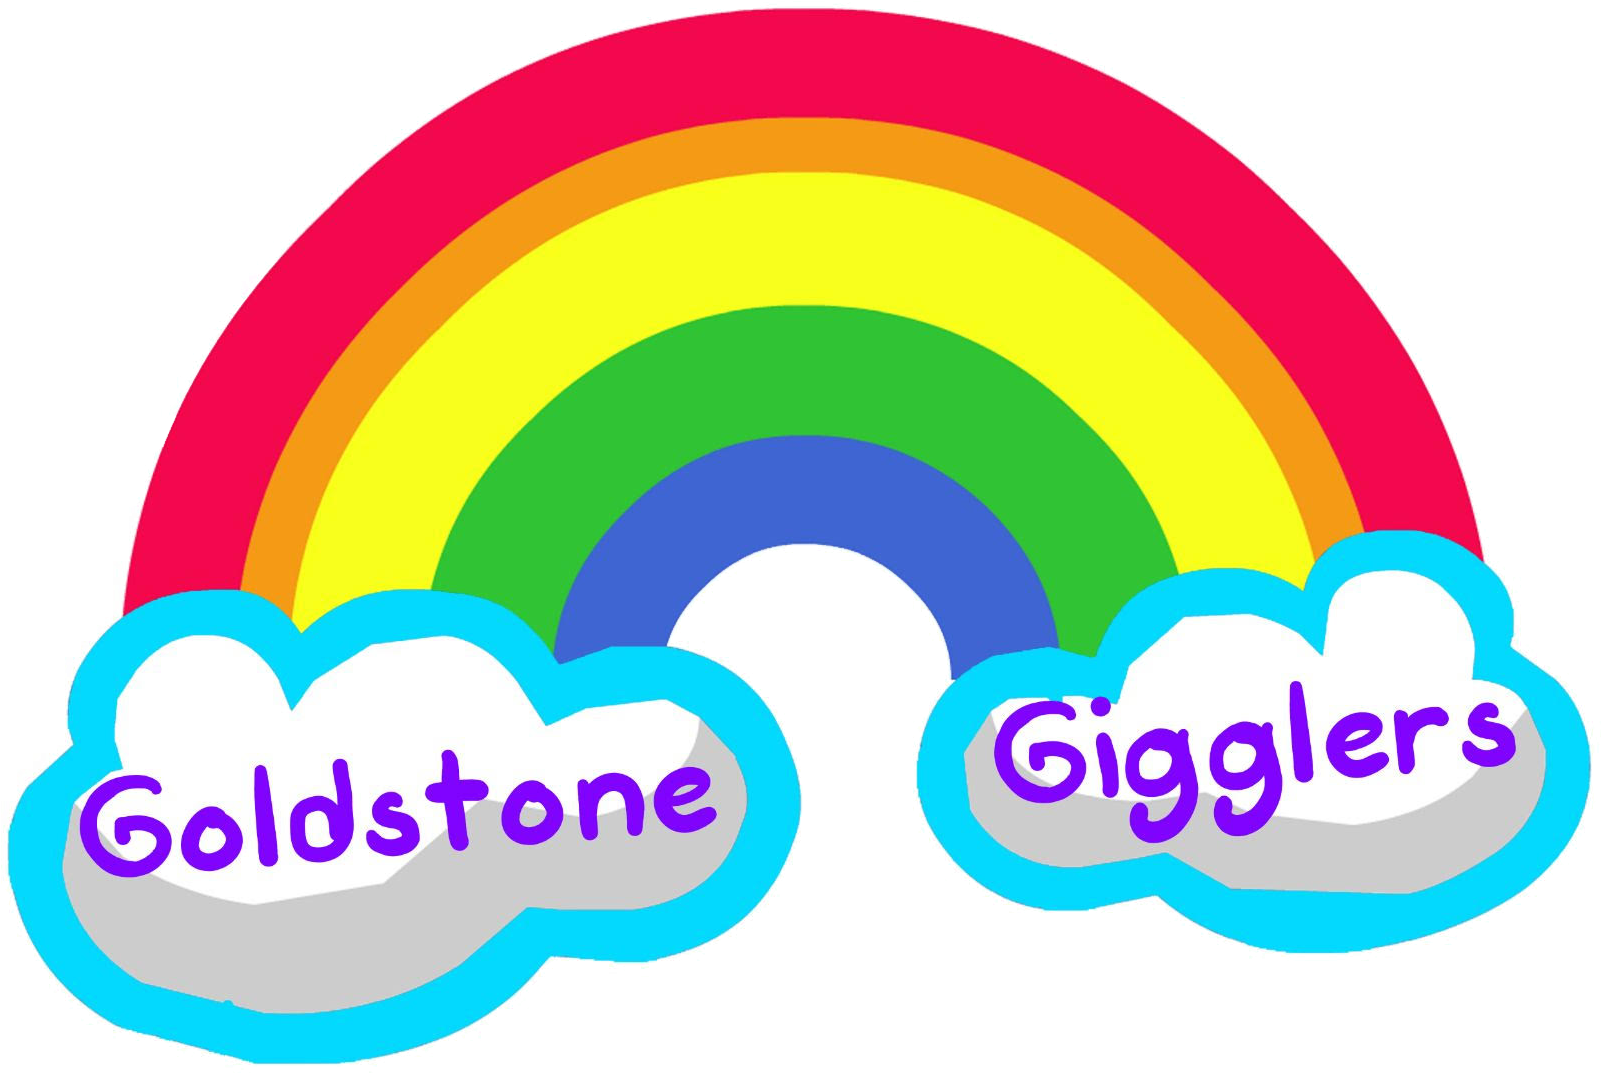 Goldstone Gigglers Provides Childcare For Children - Graphic Design (1600x1131)